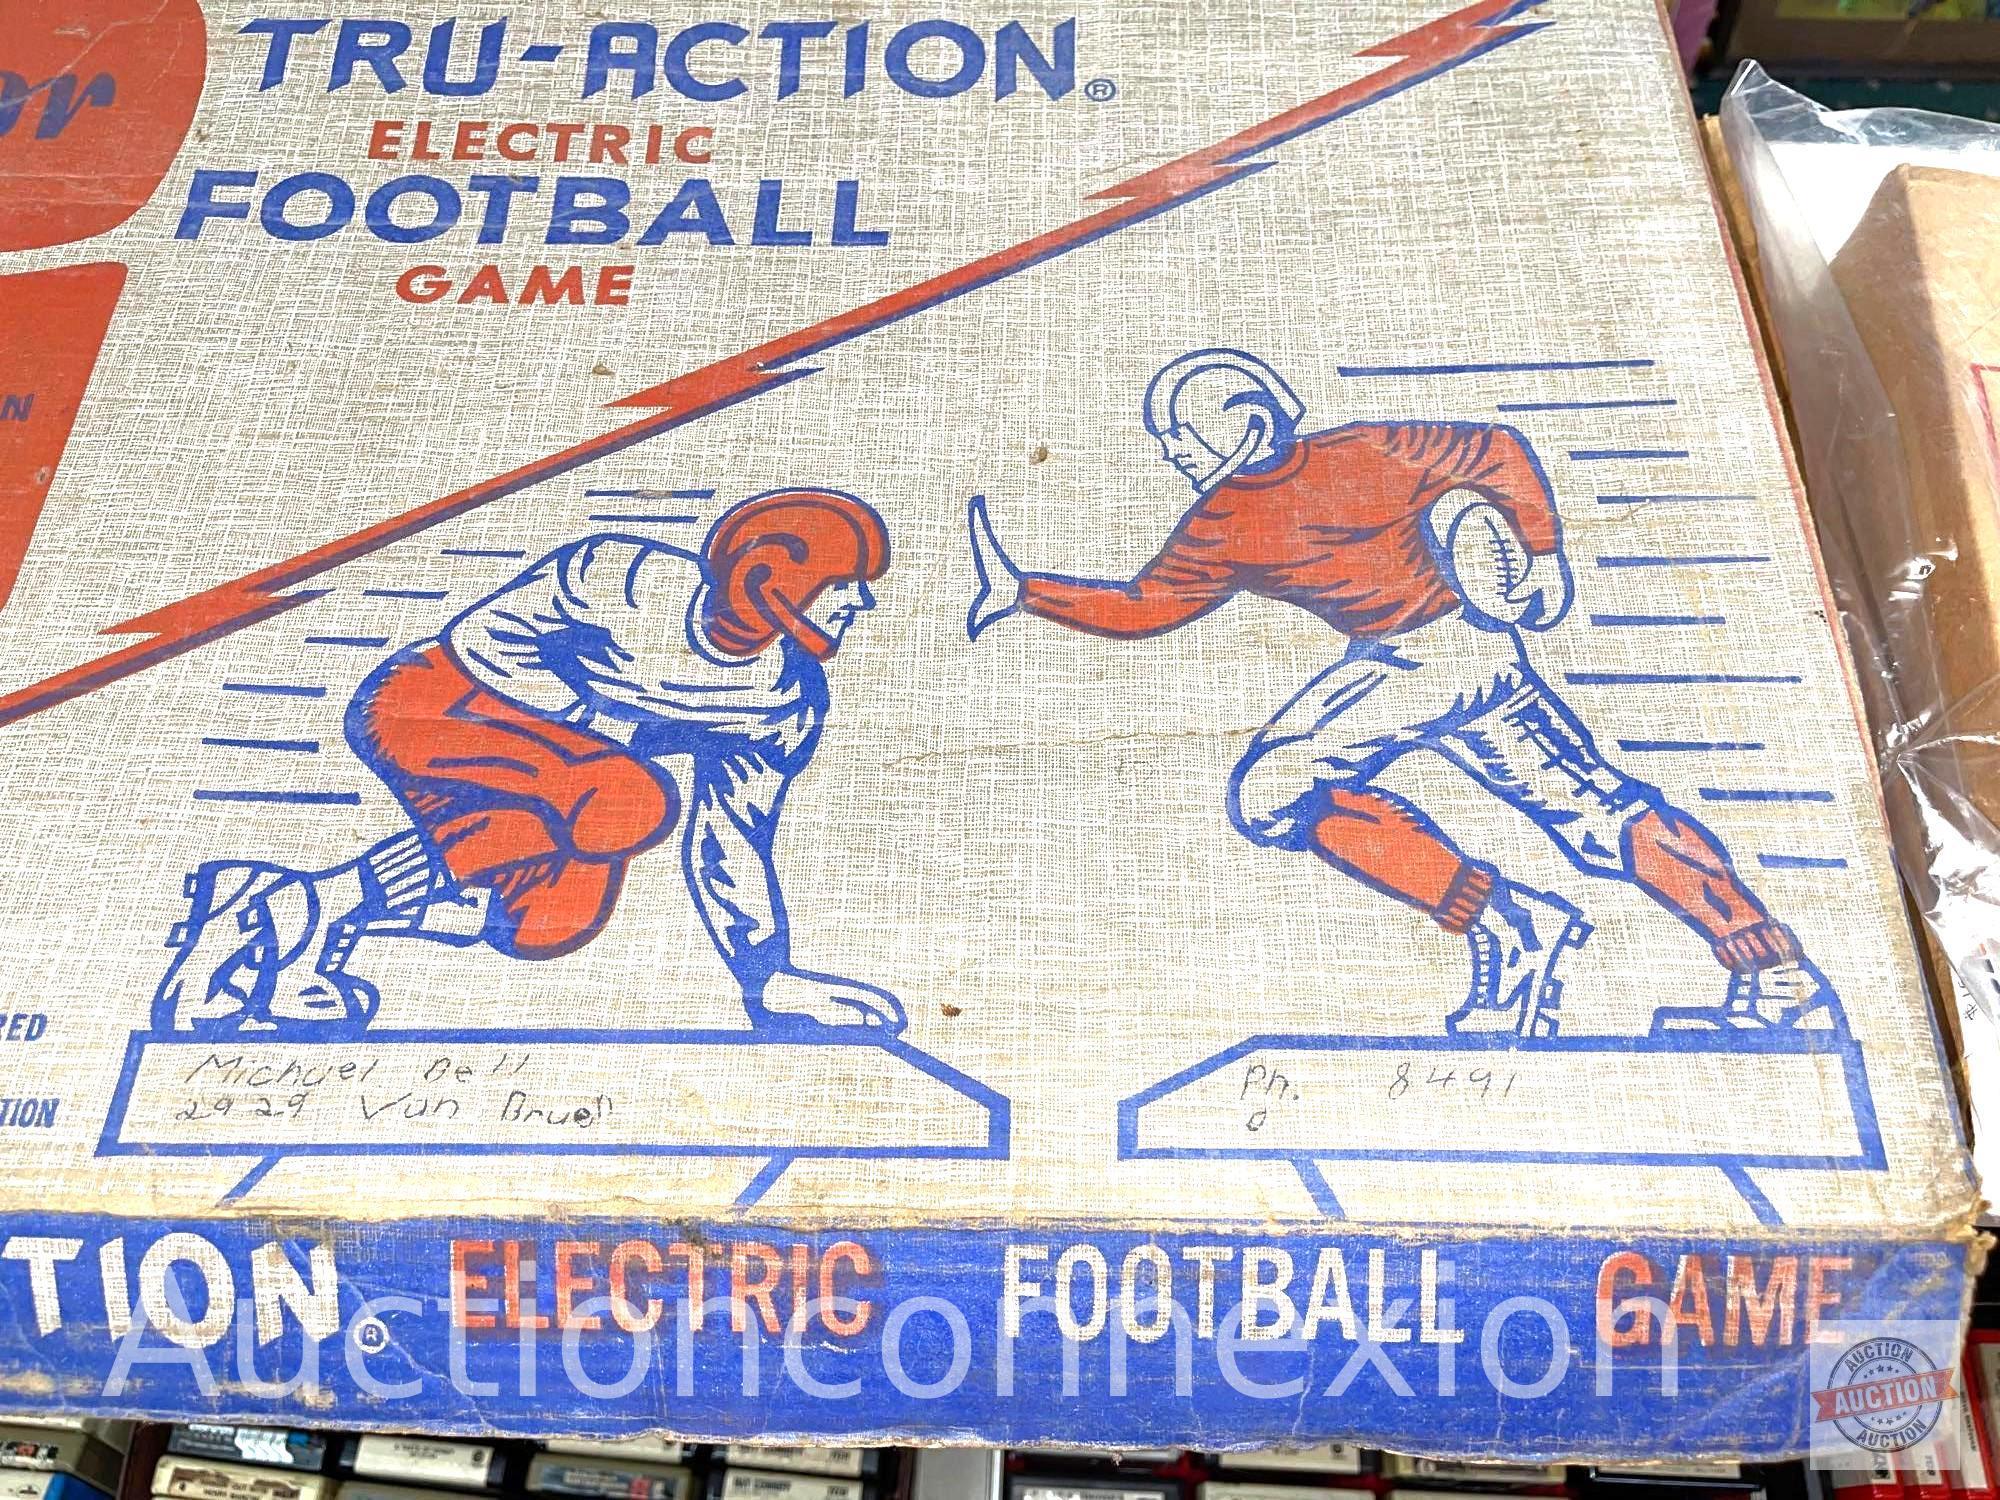 Toys - Vintage Tudor Tru-Action Electric Football game